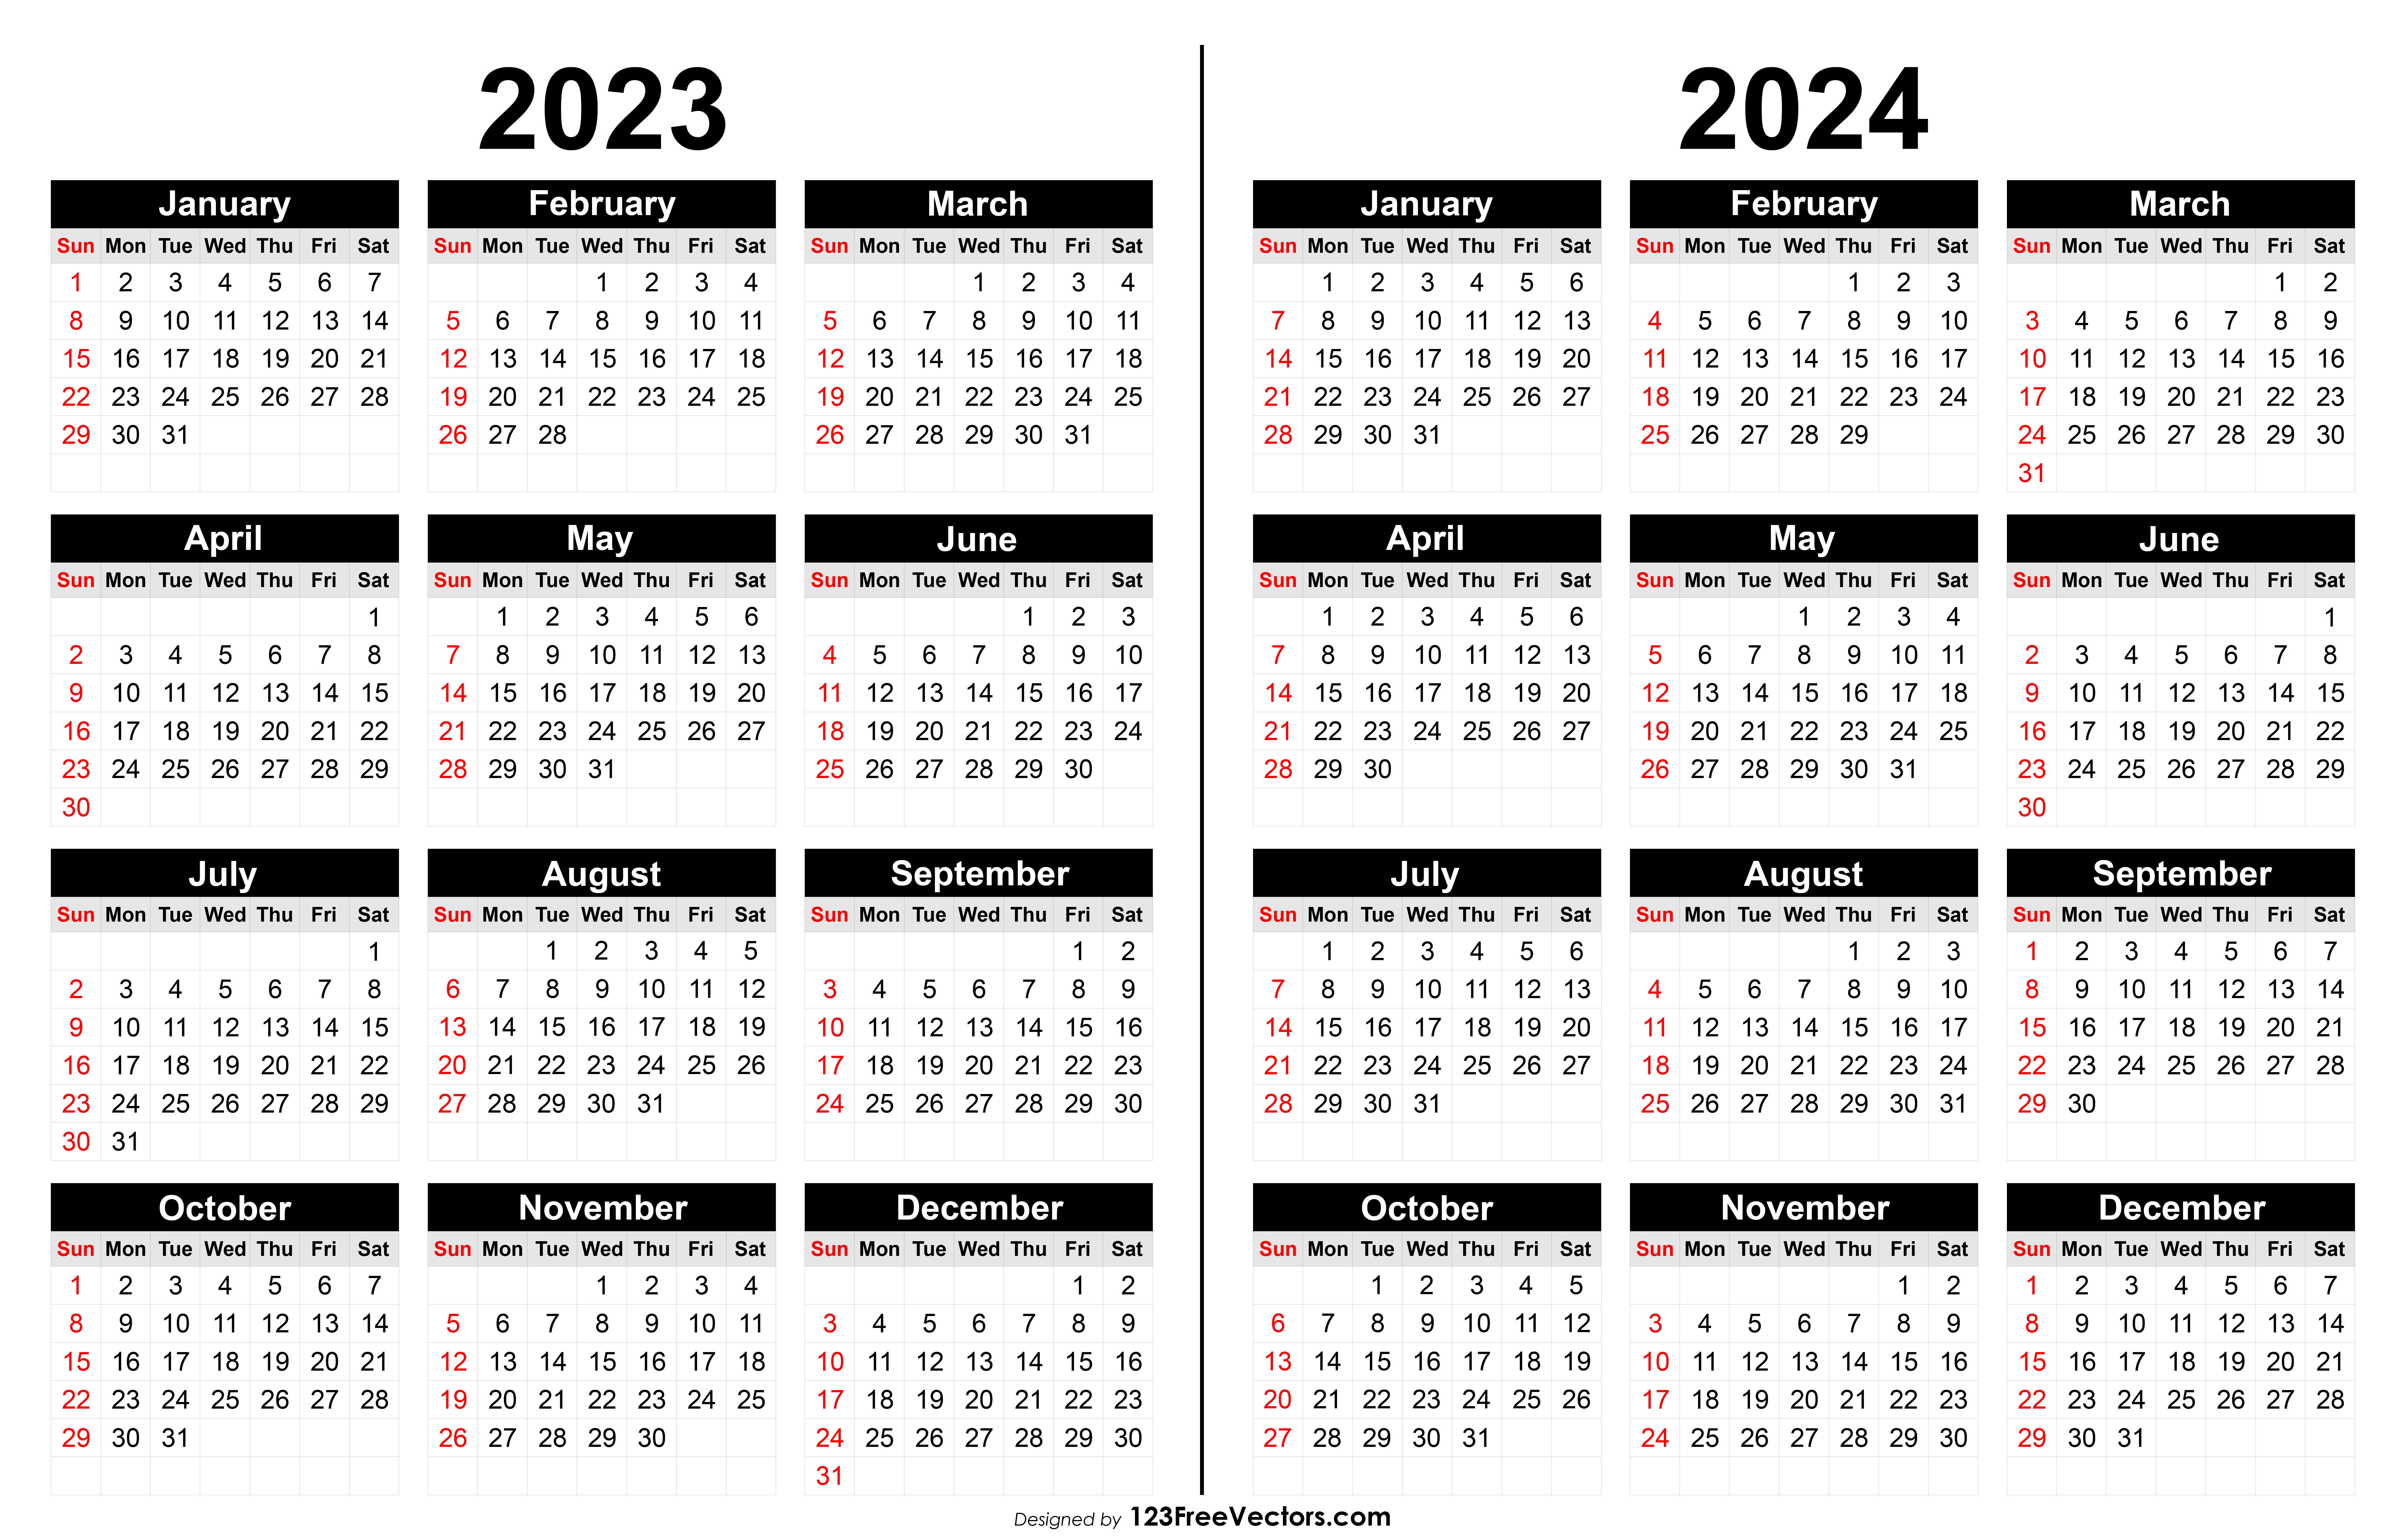 Free 2023 And 2024 Calendar Printable | Yearly Calendar 2023 And 2024 Printable Free